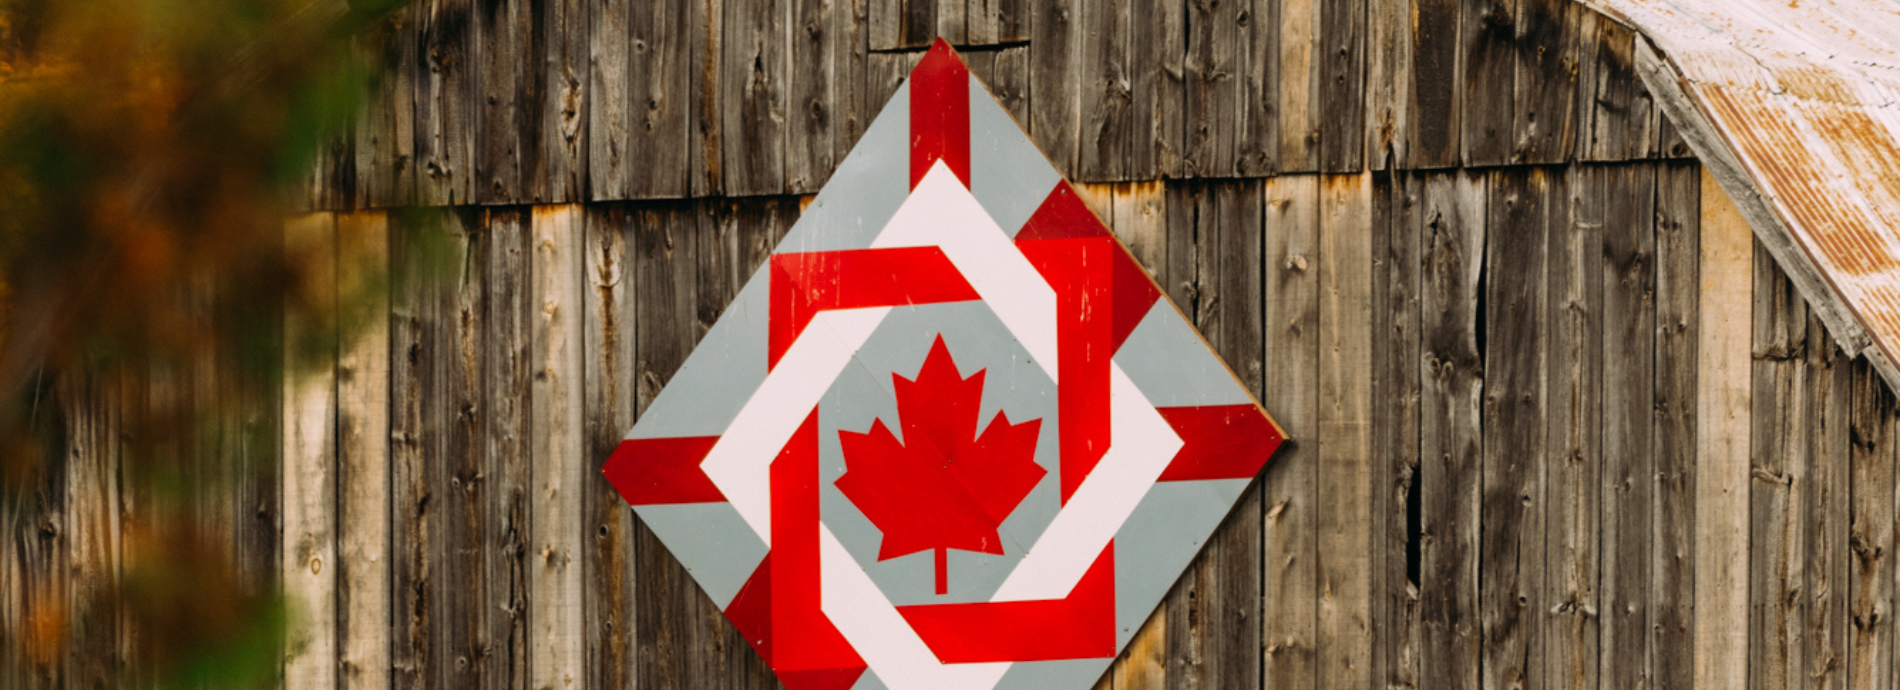 canada flag barn quilt